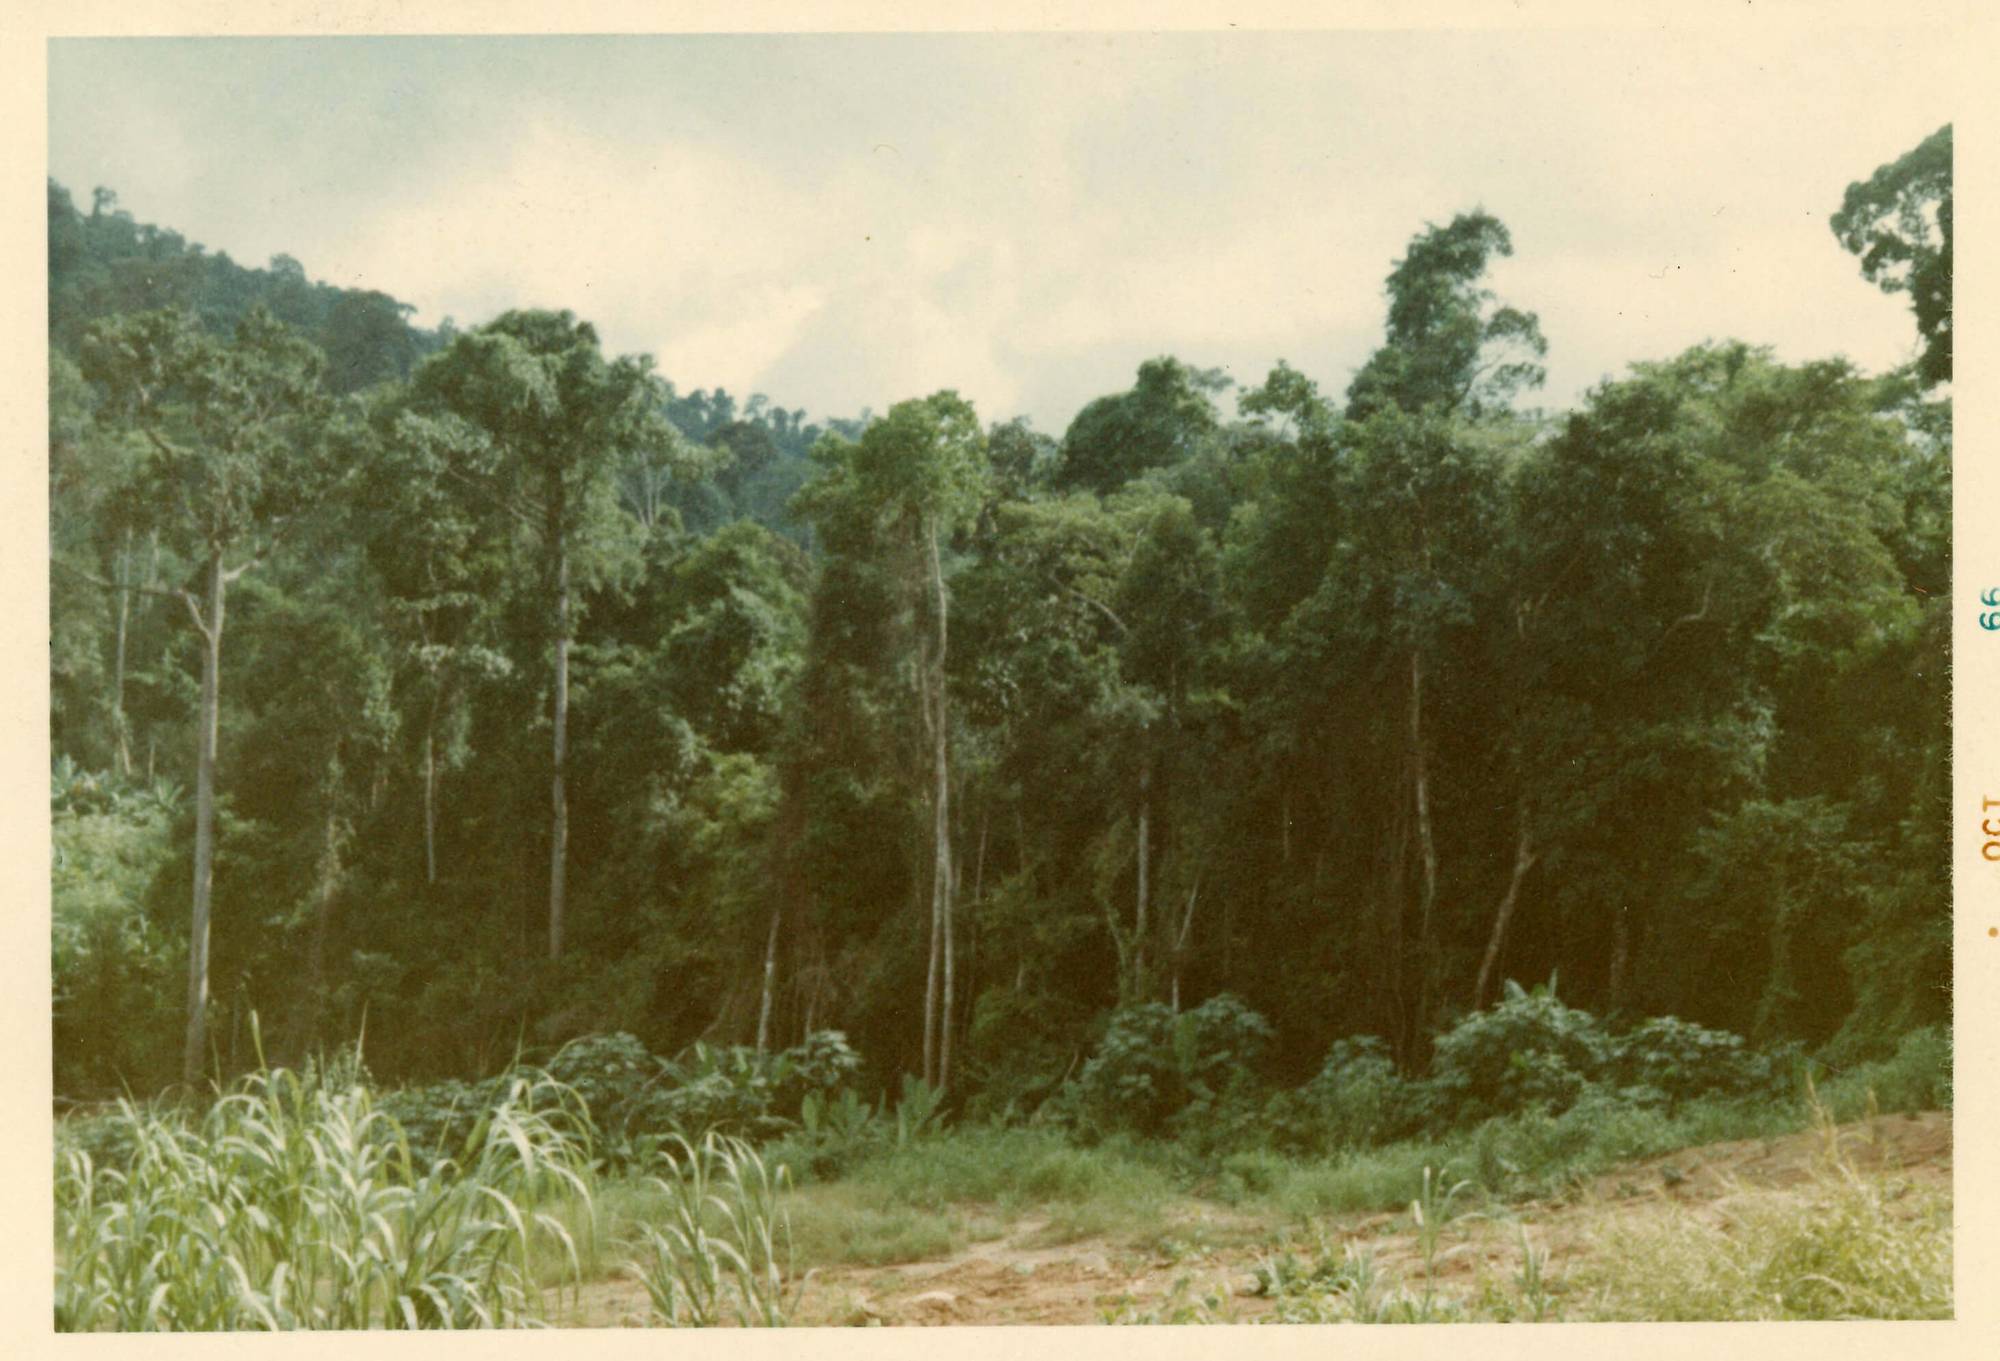 Dense jungles. Margins indicate photo was taken October 1966.